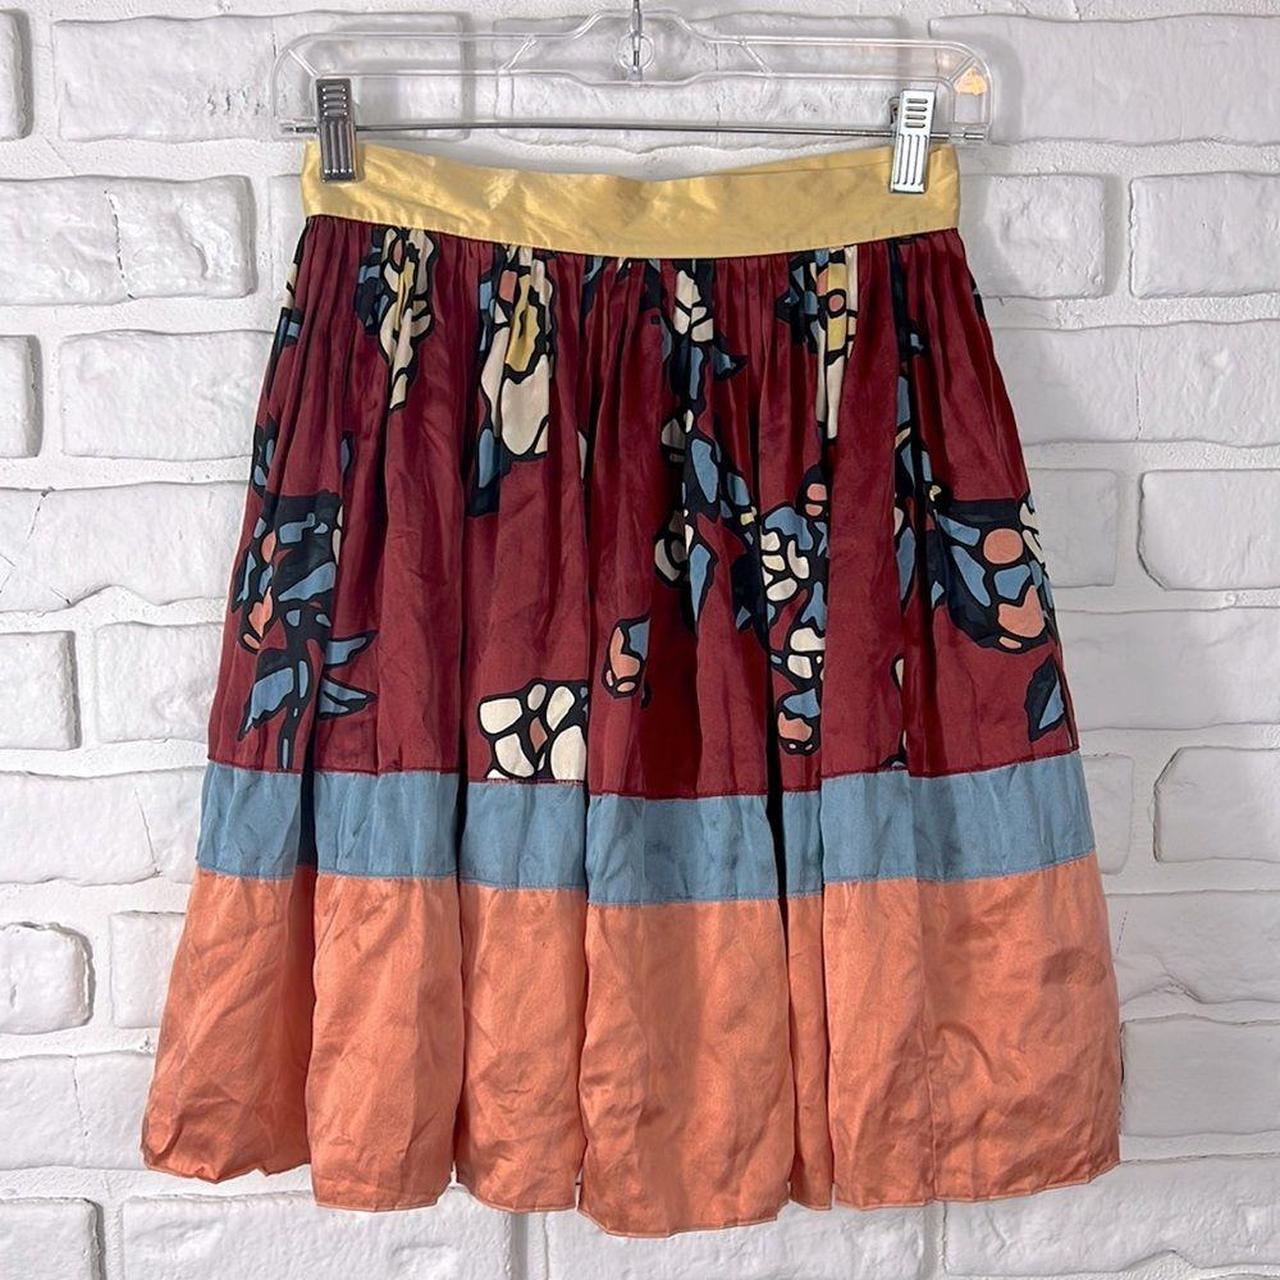 Product Image 1 - 100% Silk floral print skirt
Zipper